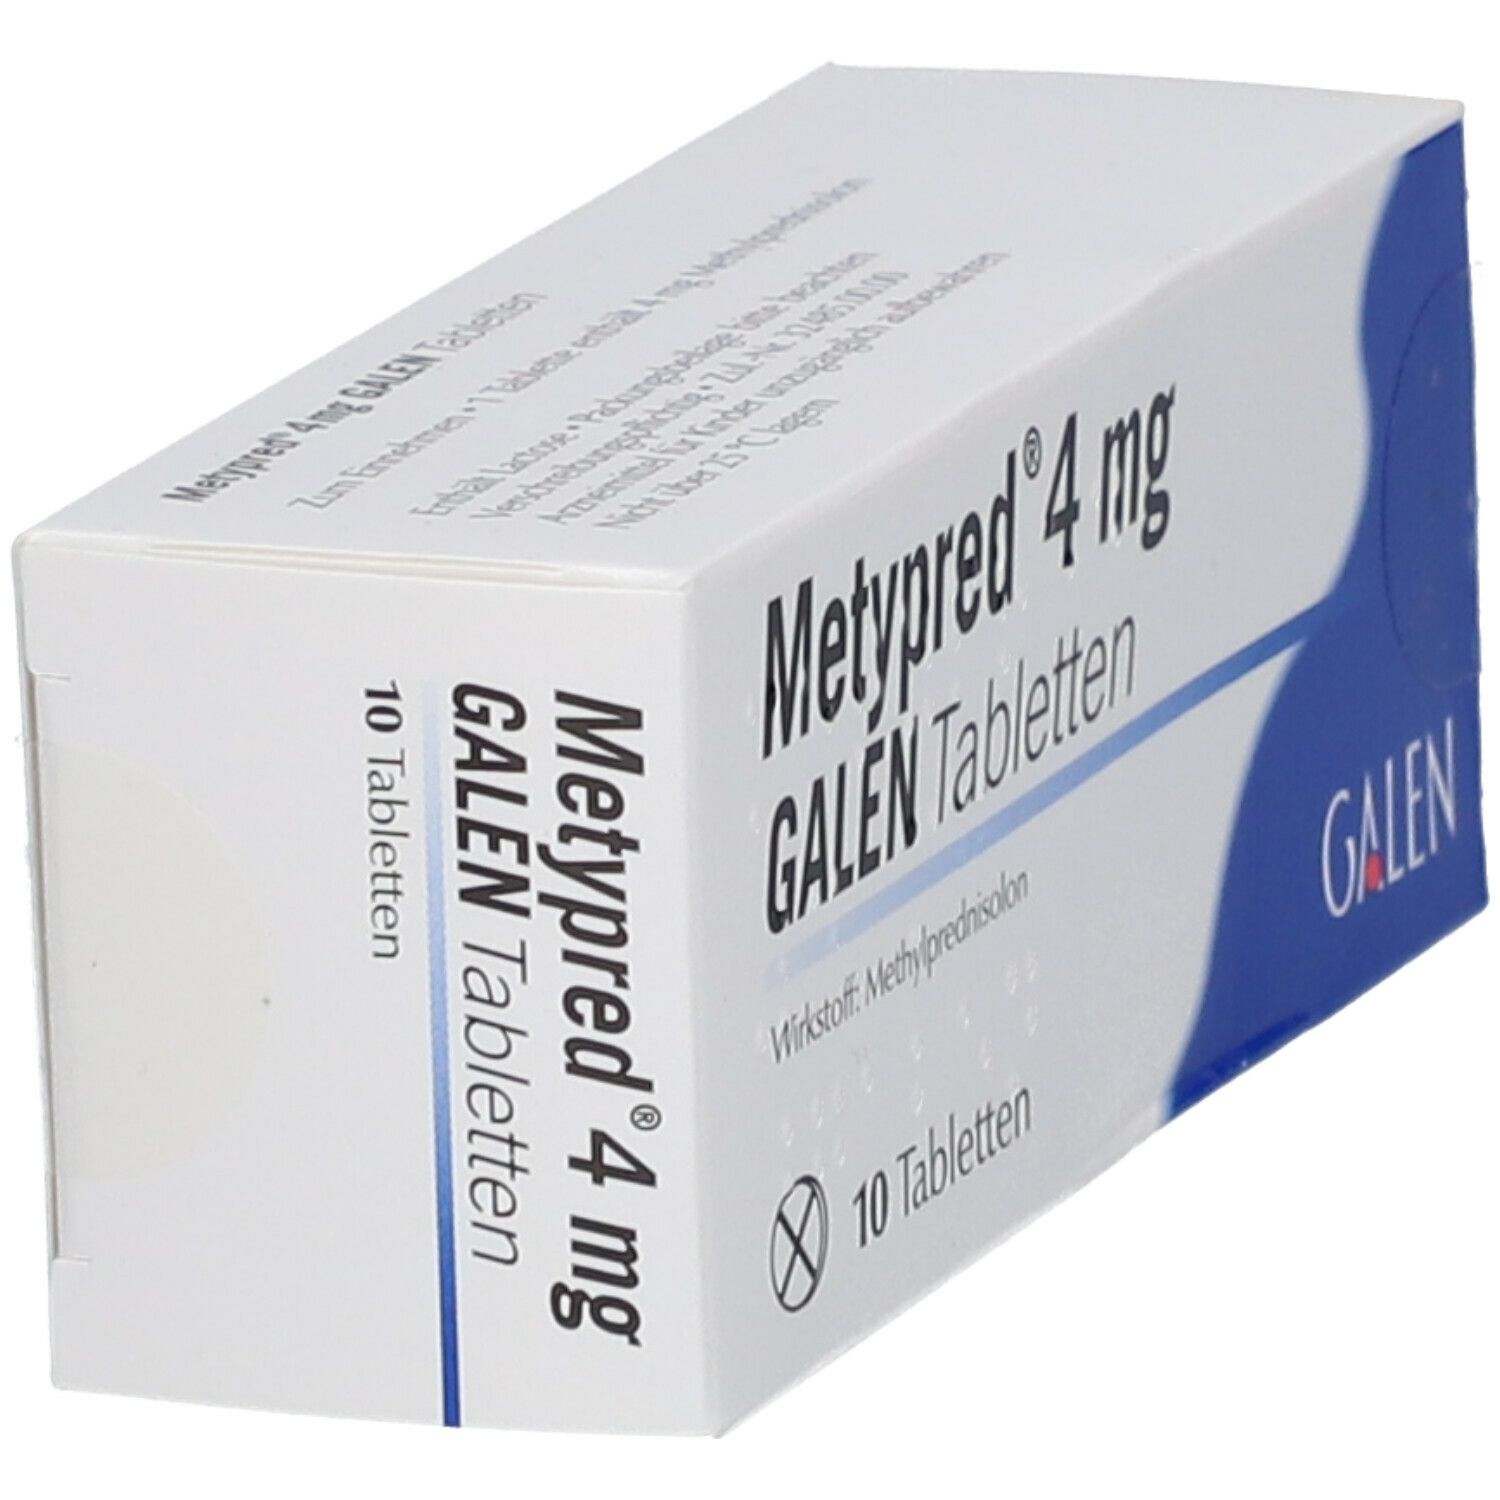 Metypred® 4 mg GALEN